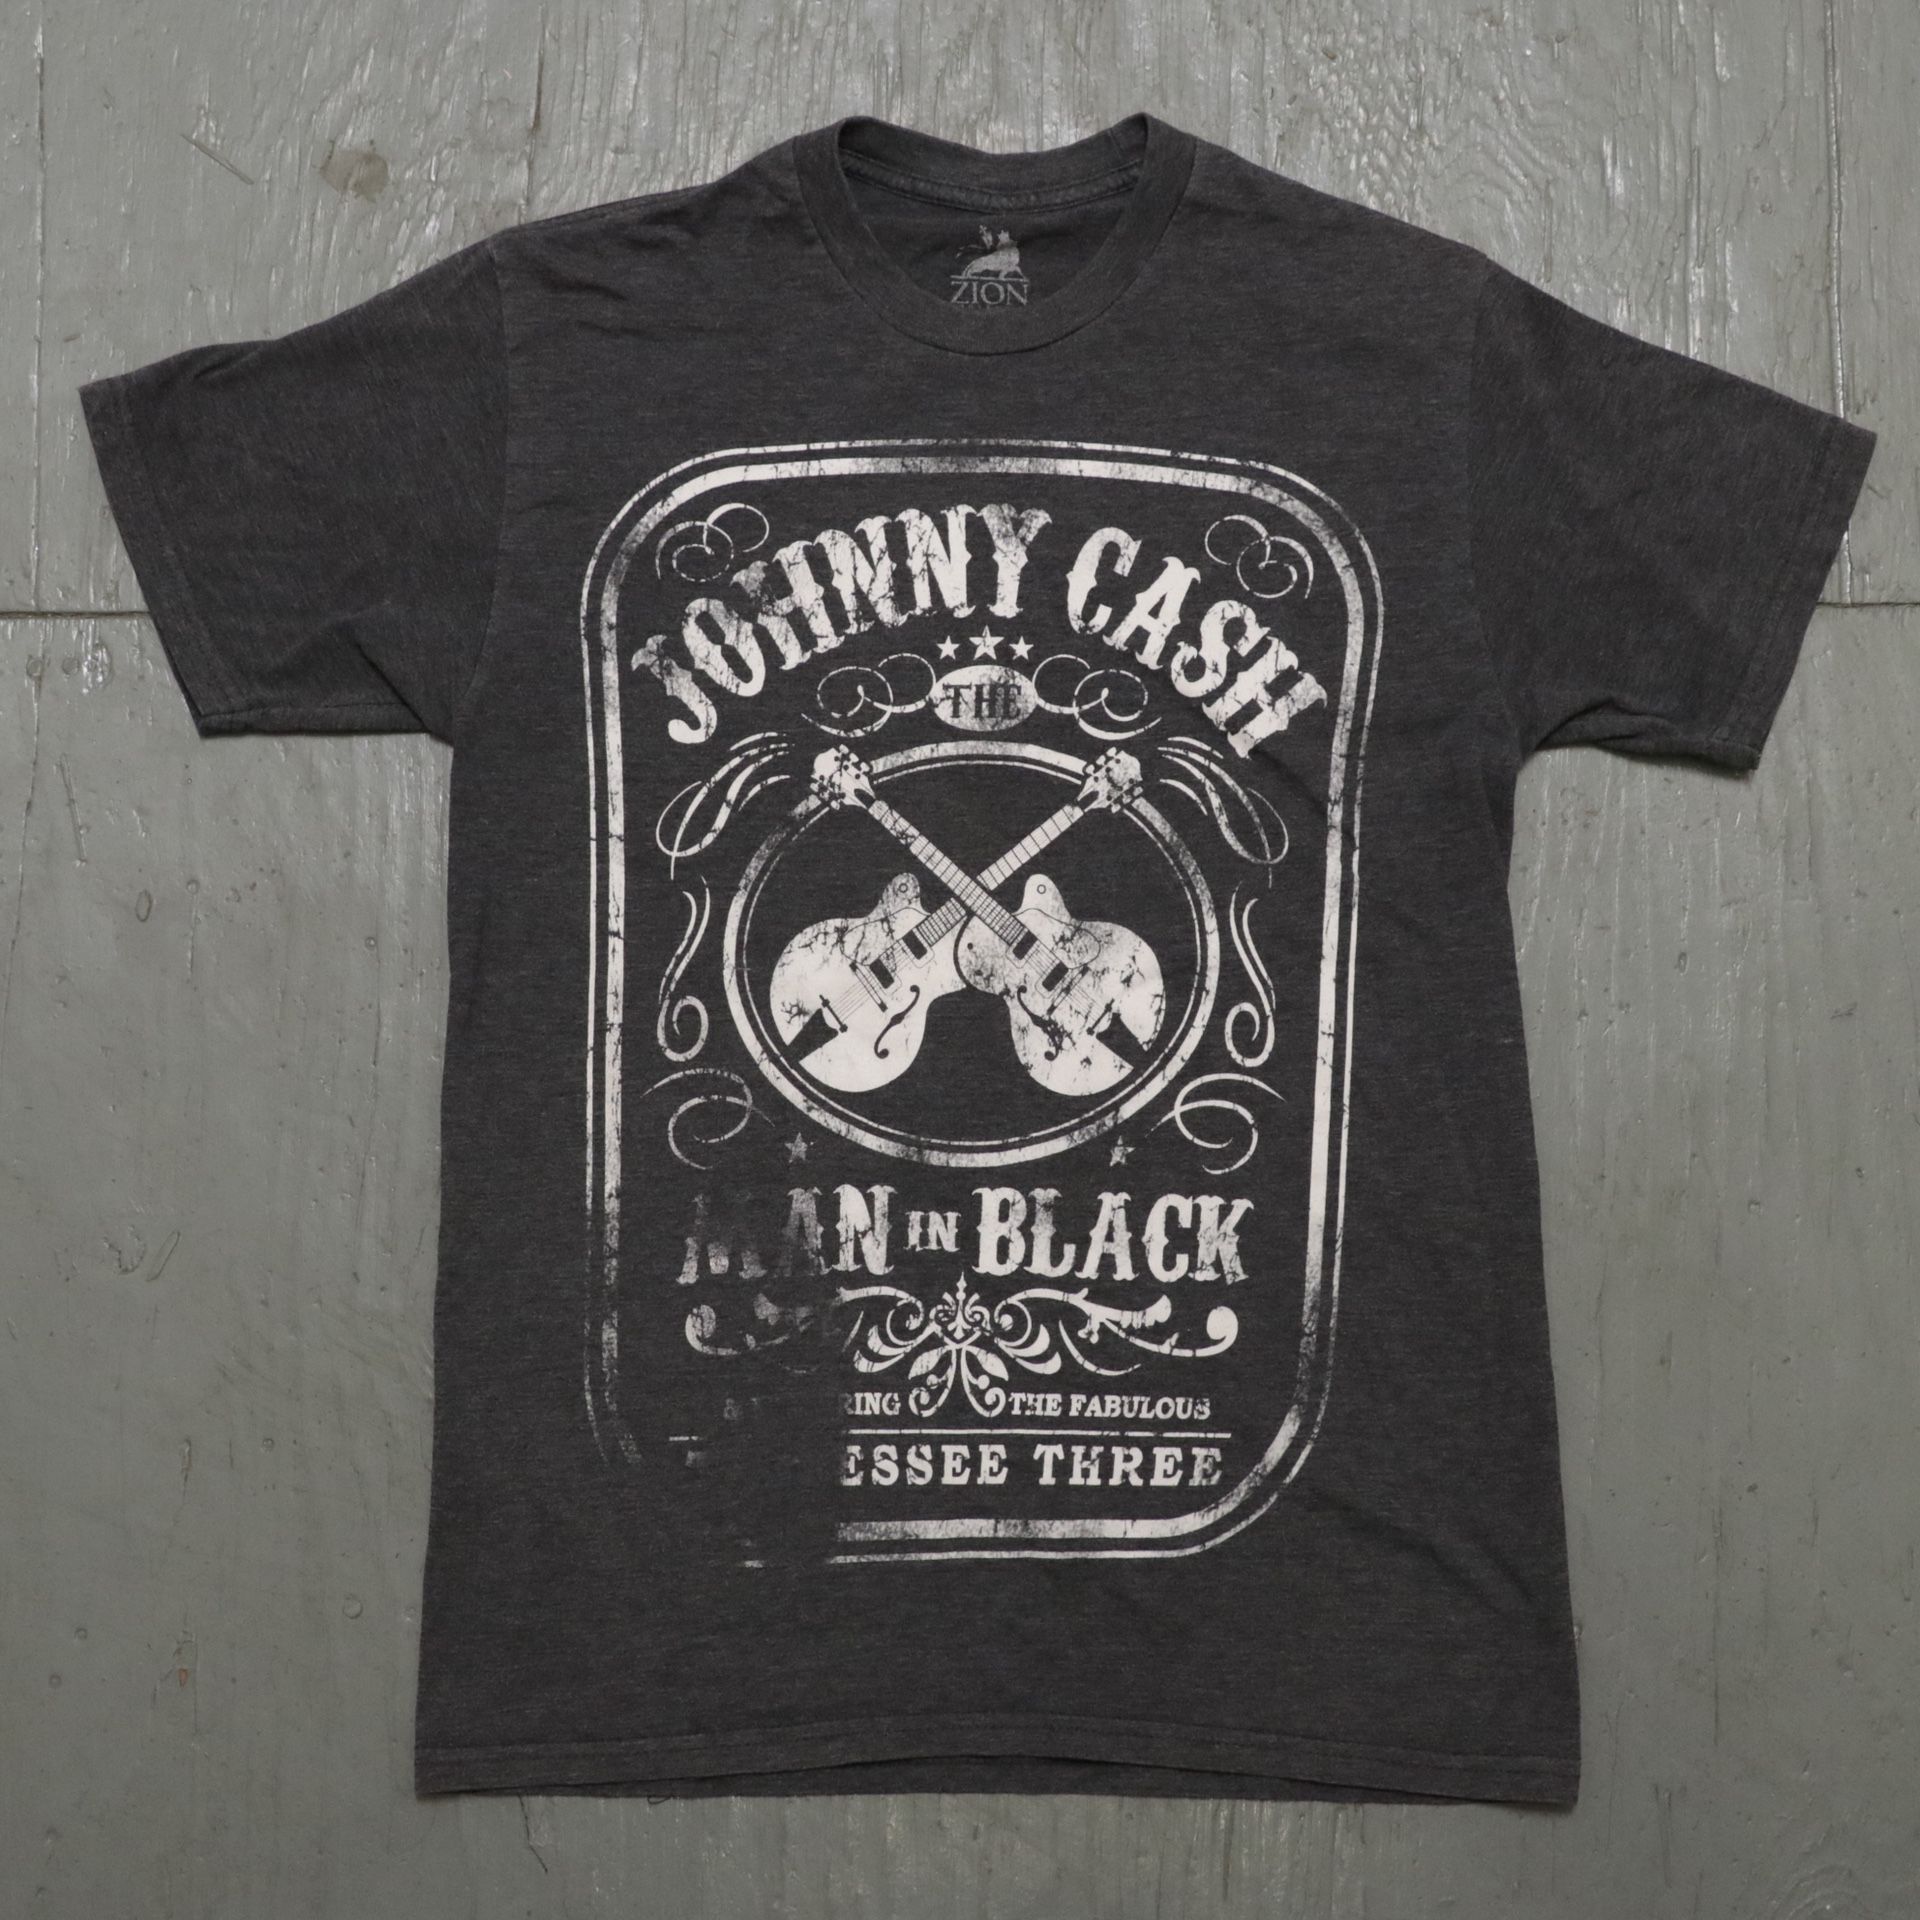 Johnny Cash Man in Black shirt